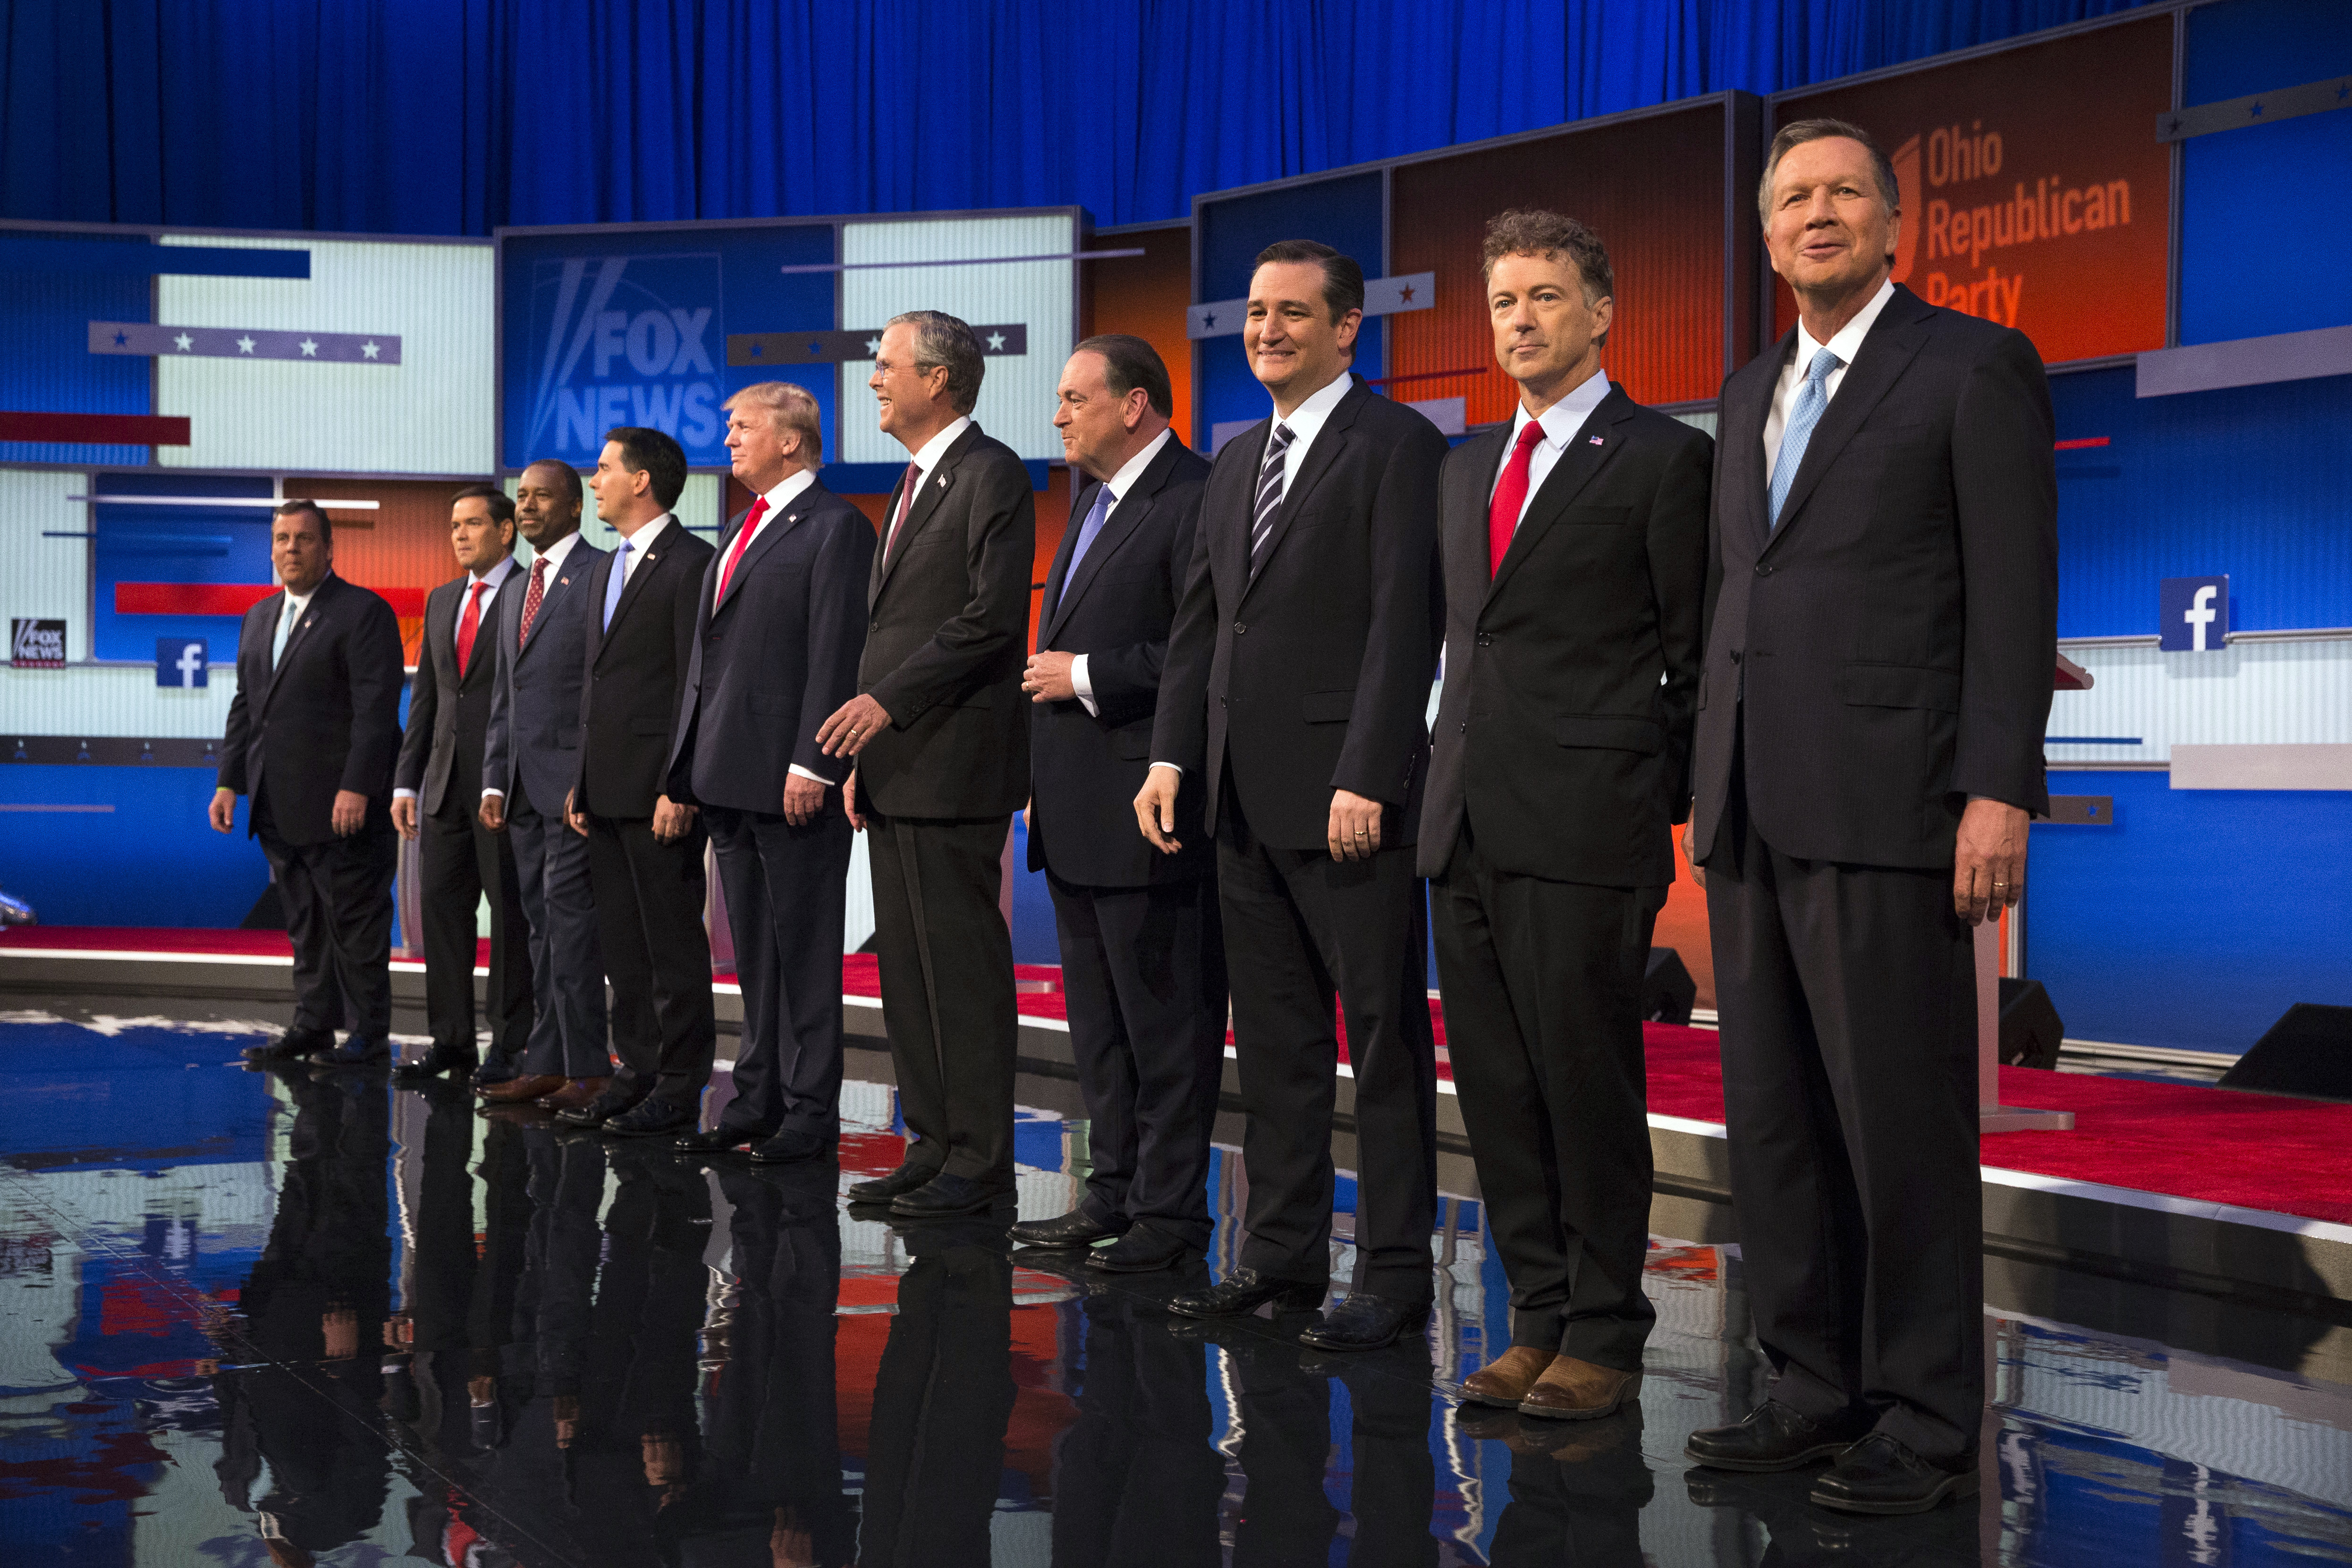 GOP Debate: Highlights, analysis of the first Republican debate - CBS News4982 x 3321